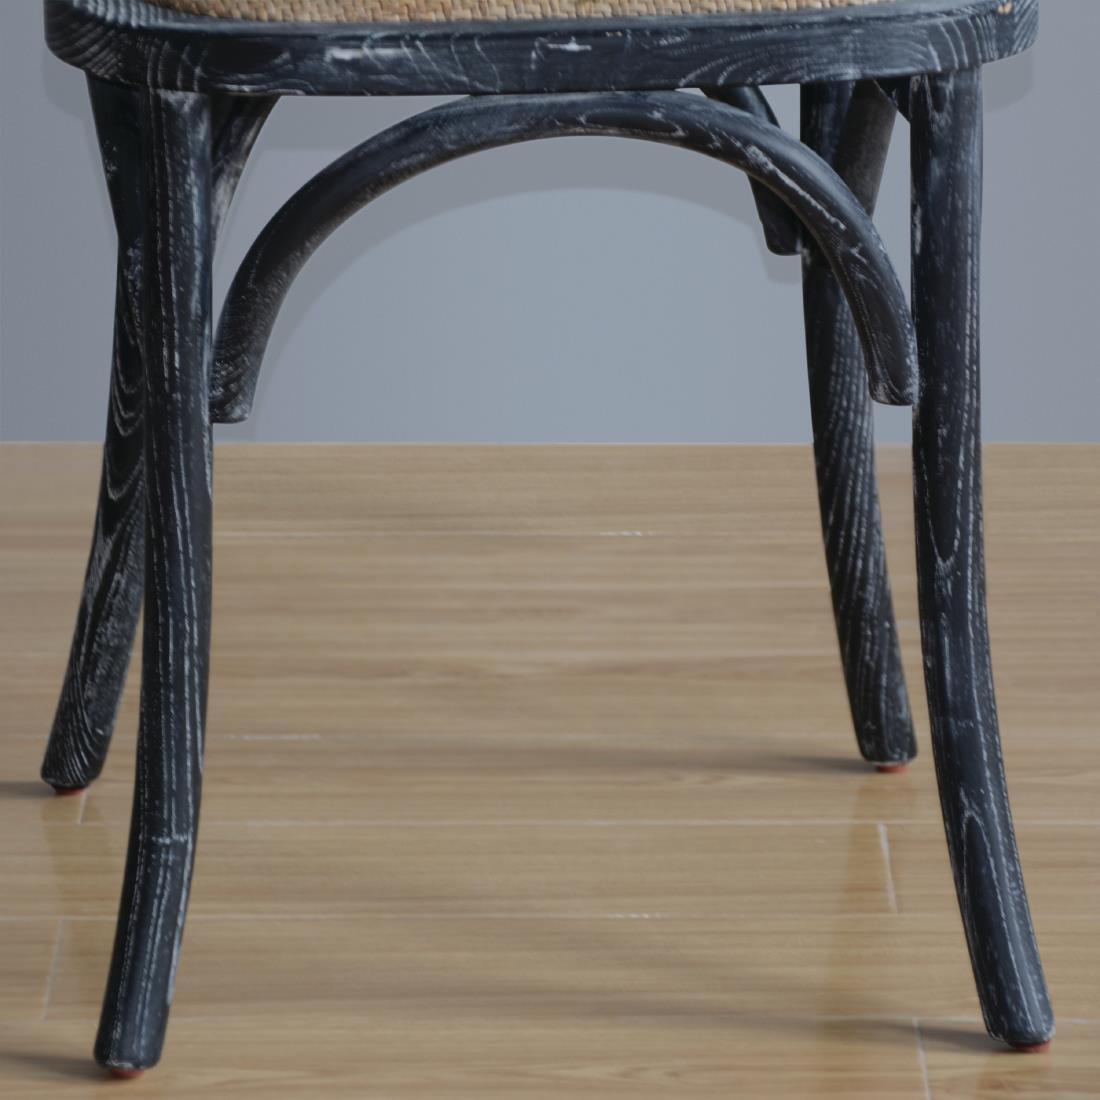 GG654 - Bolero Wooden Dining Chair with Cross Backrest Black Wash Finish (Box 2) - GG654  - 5